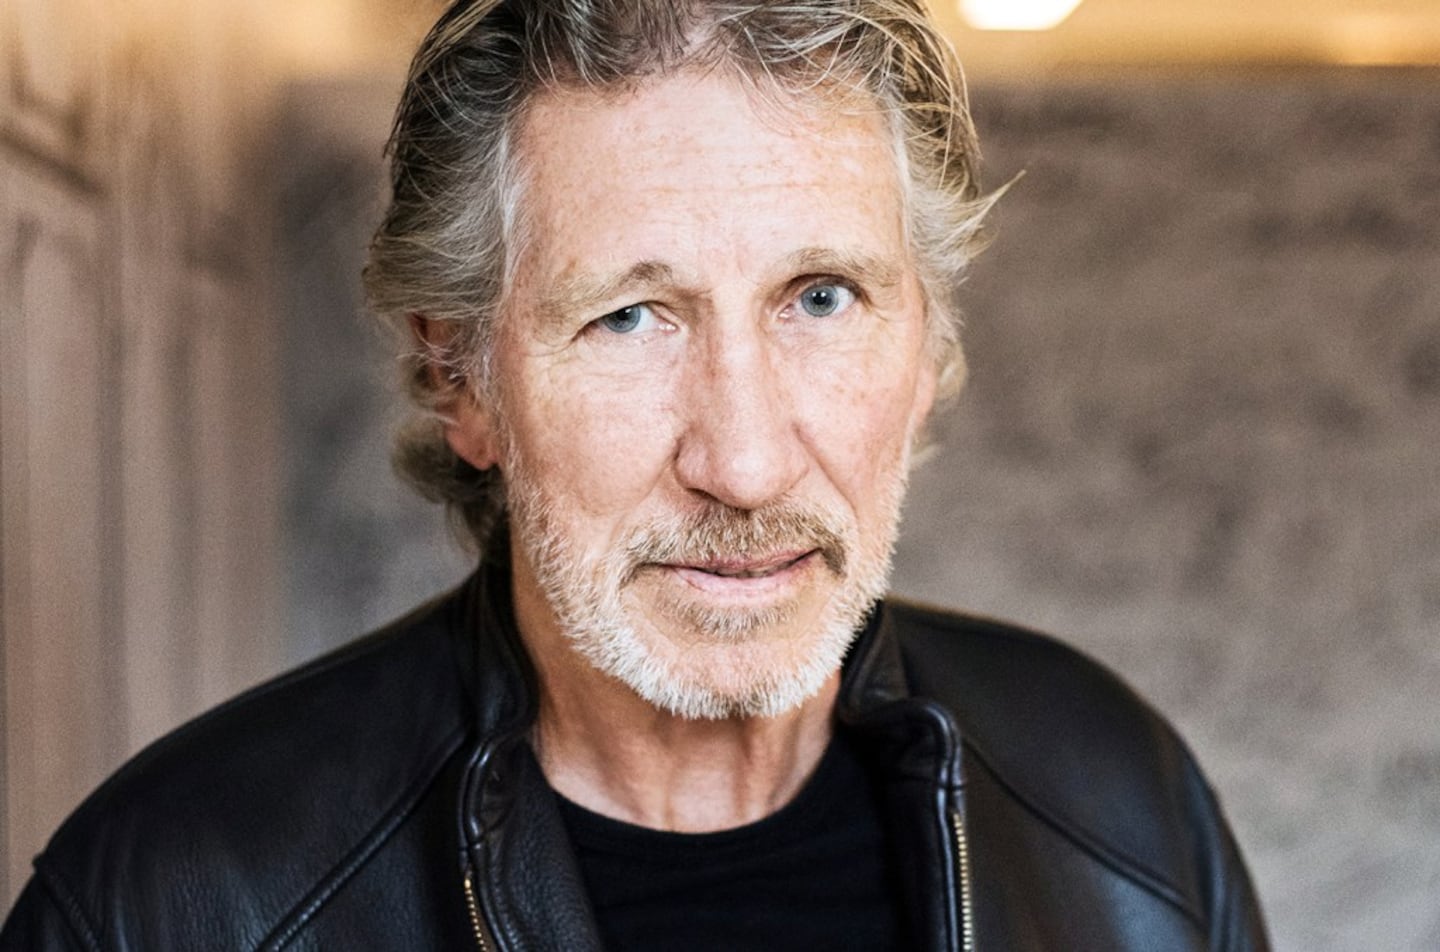 Roger Waters: “Fue una espera larga pero buena”